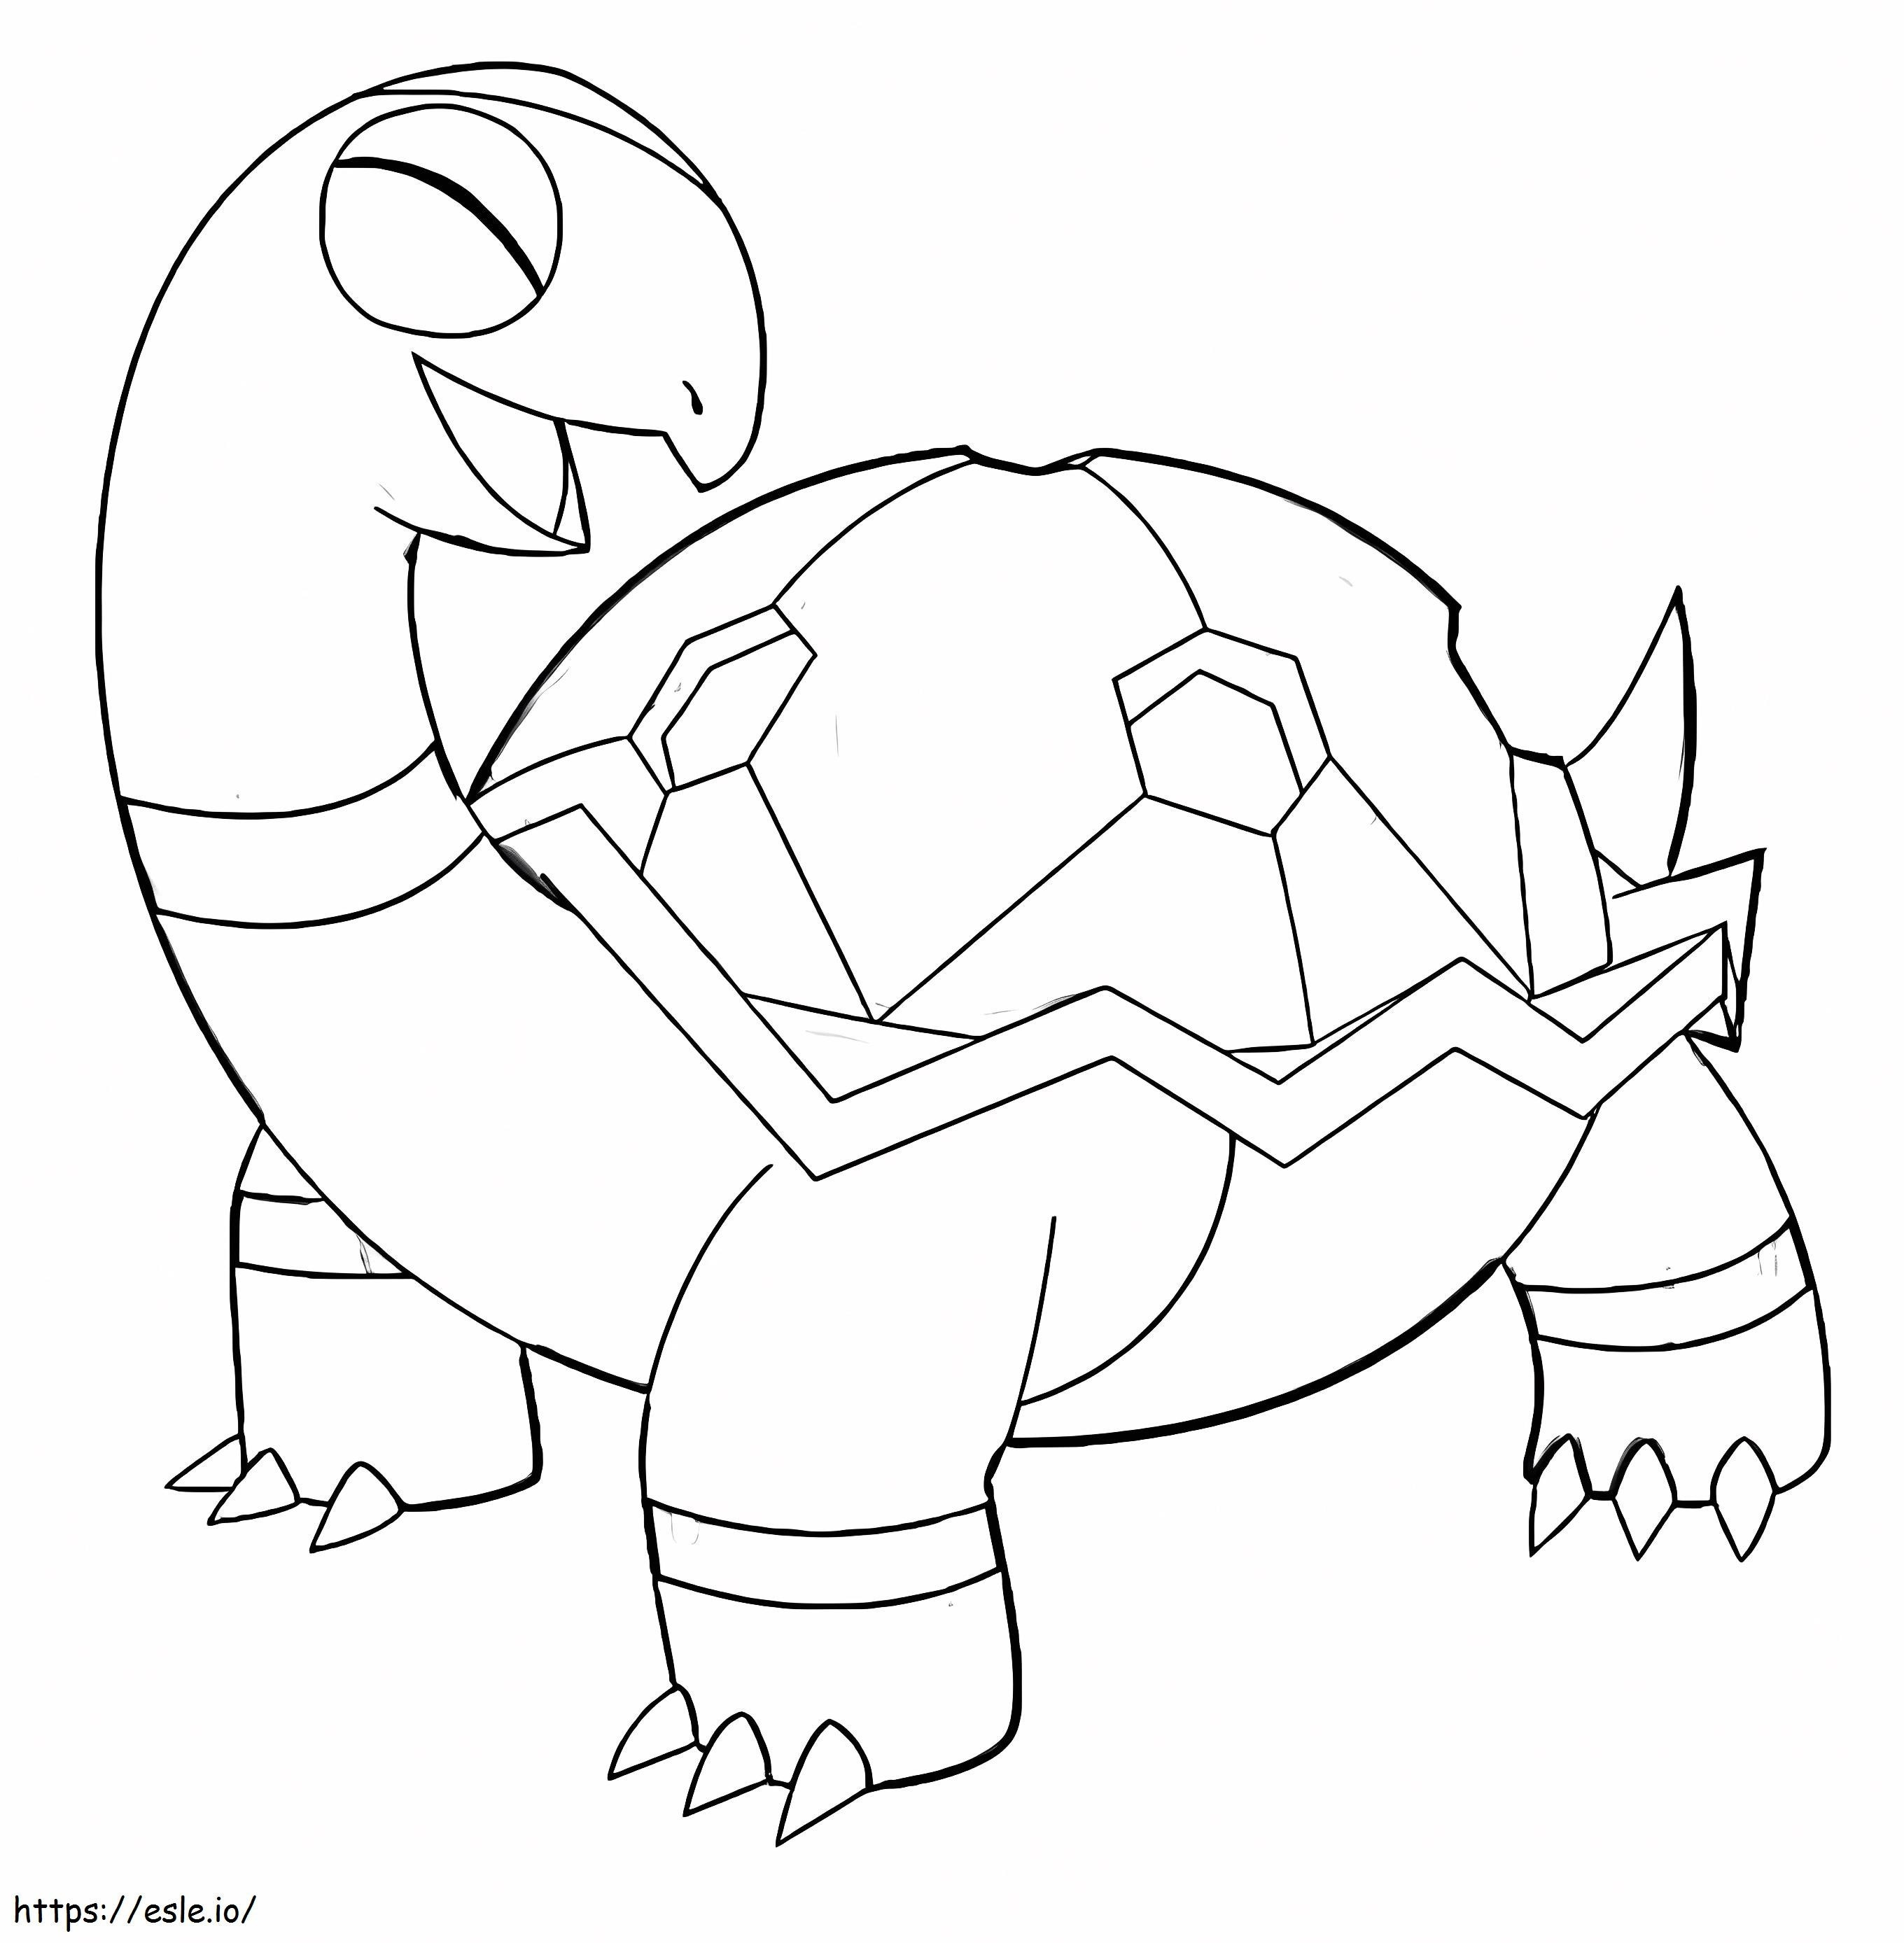 Torkoal Pokémon 2 ausmalbilder